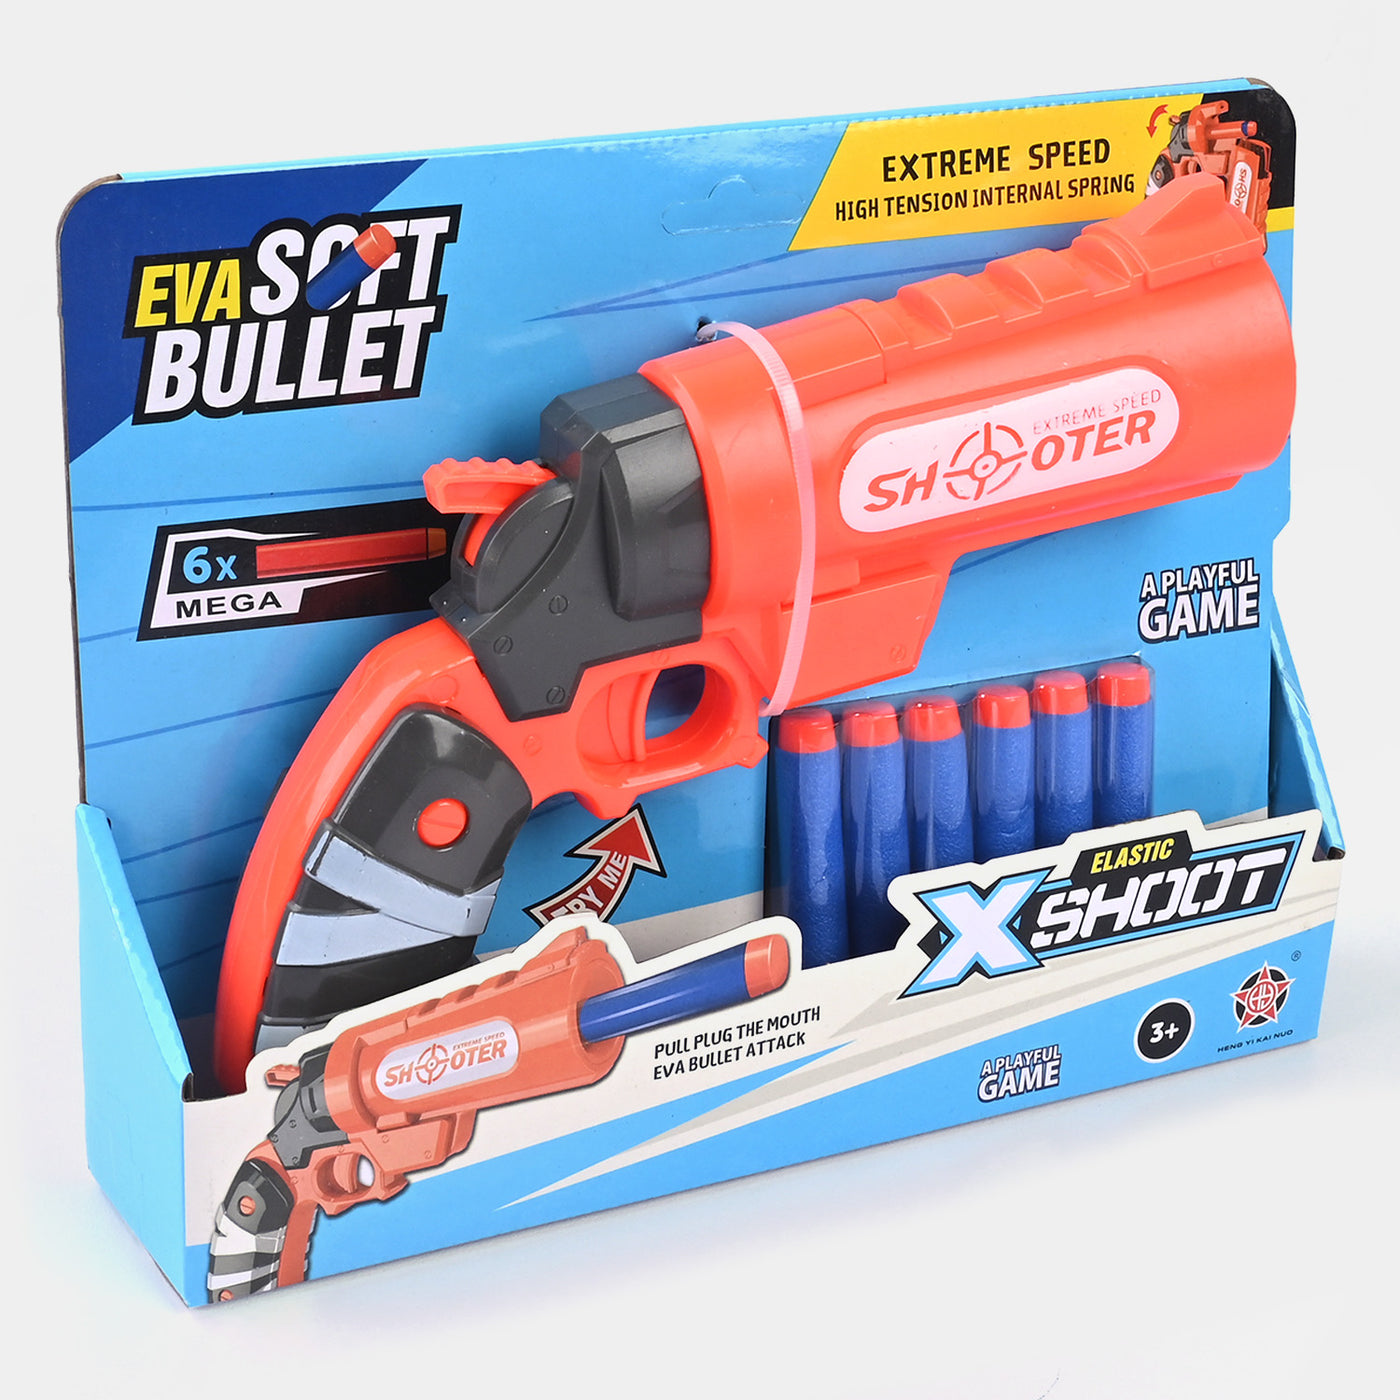 Soft Dart Target Toy For Kids